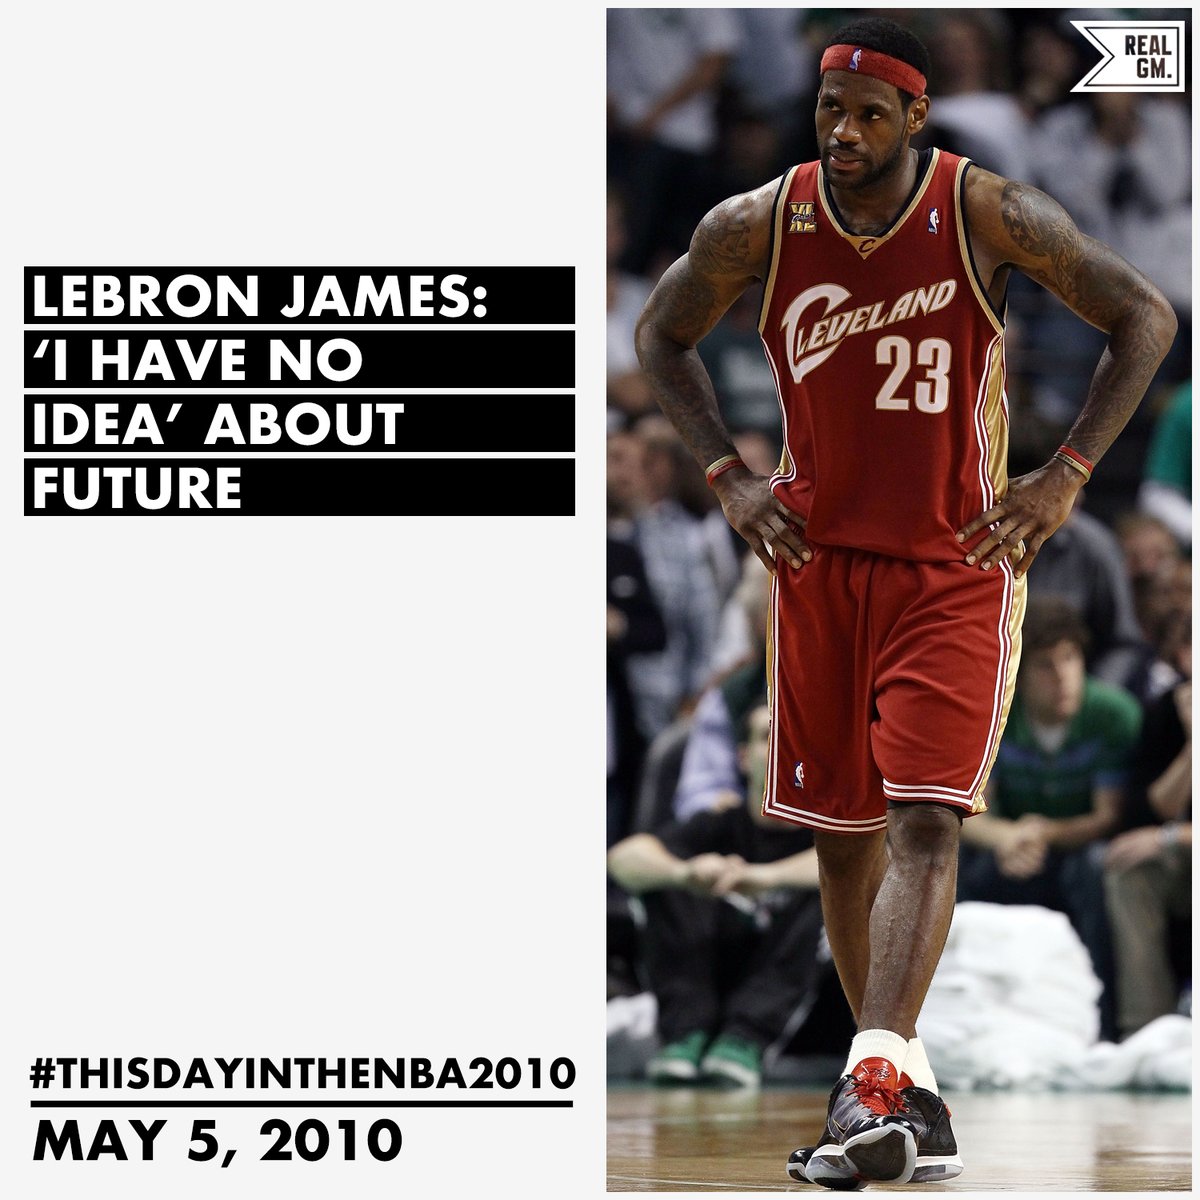  #ThisDayInTheNBA2010May 5, 2010LeBron James: 'I Have No Idea' About The Future https://basketball.realgm.com/wiretap/203694/LeBron-James-I-Have-No-Idea-About-The-Future